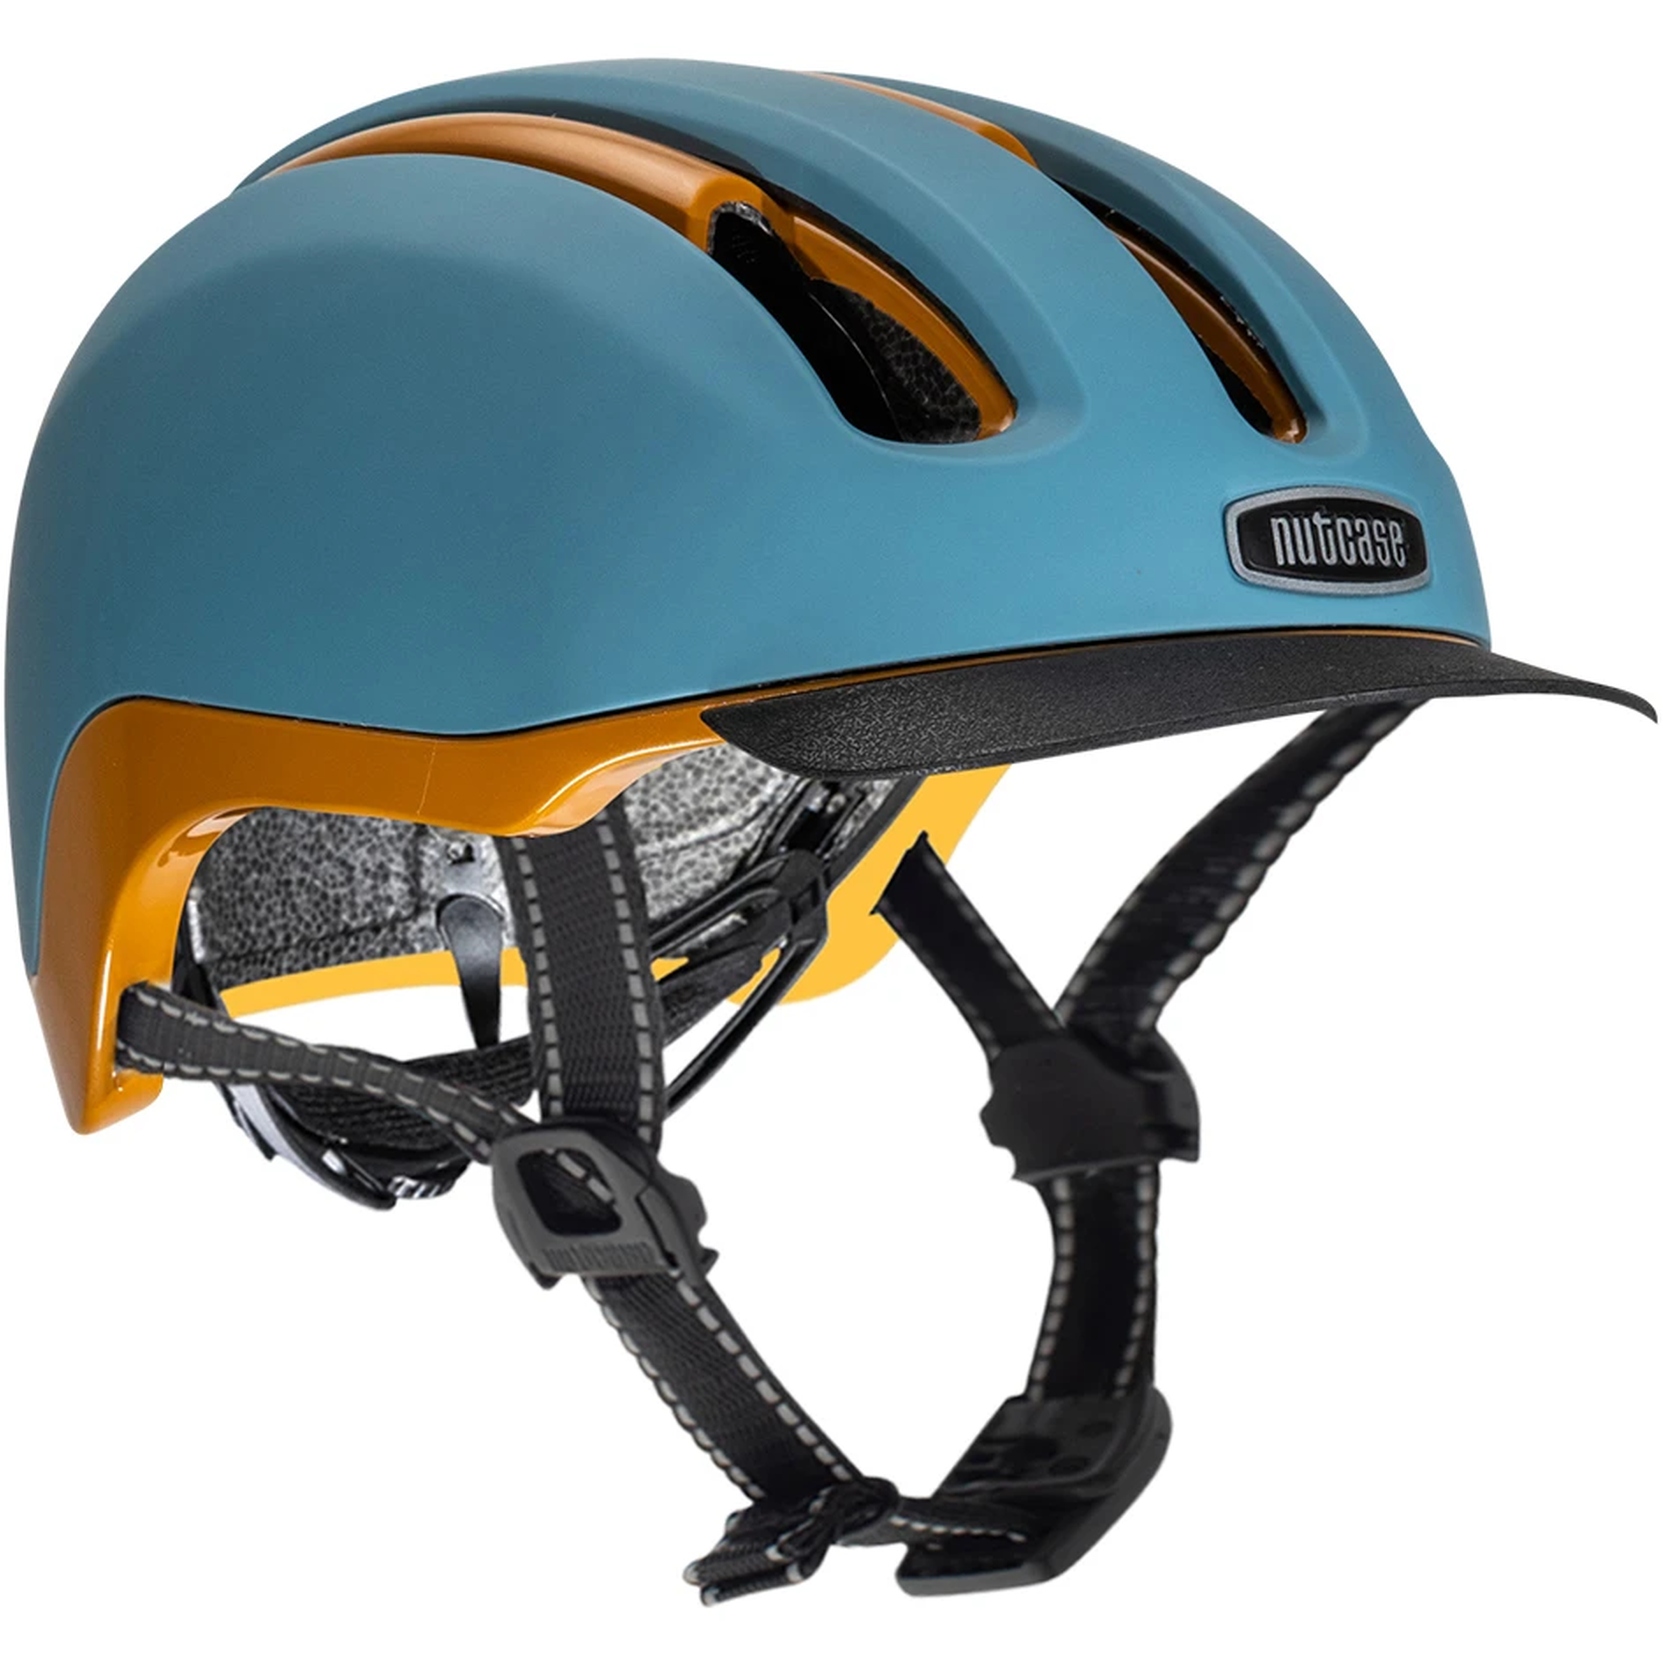 Productfoto van Nutcase Vio Adventure MIPS Helmet - Gravelstoke